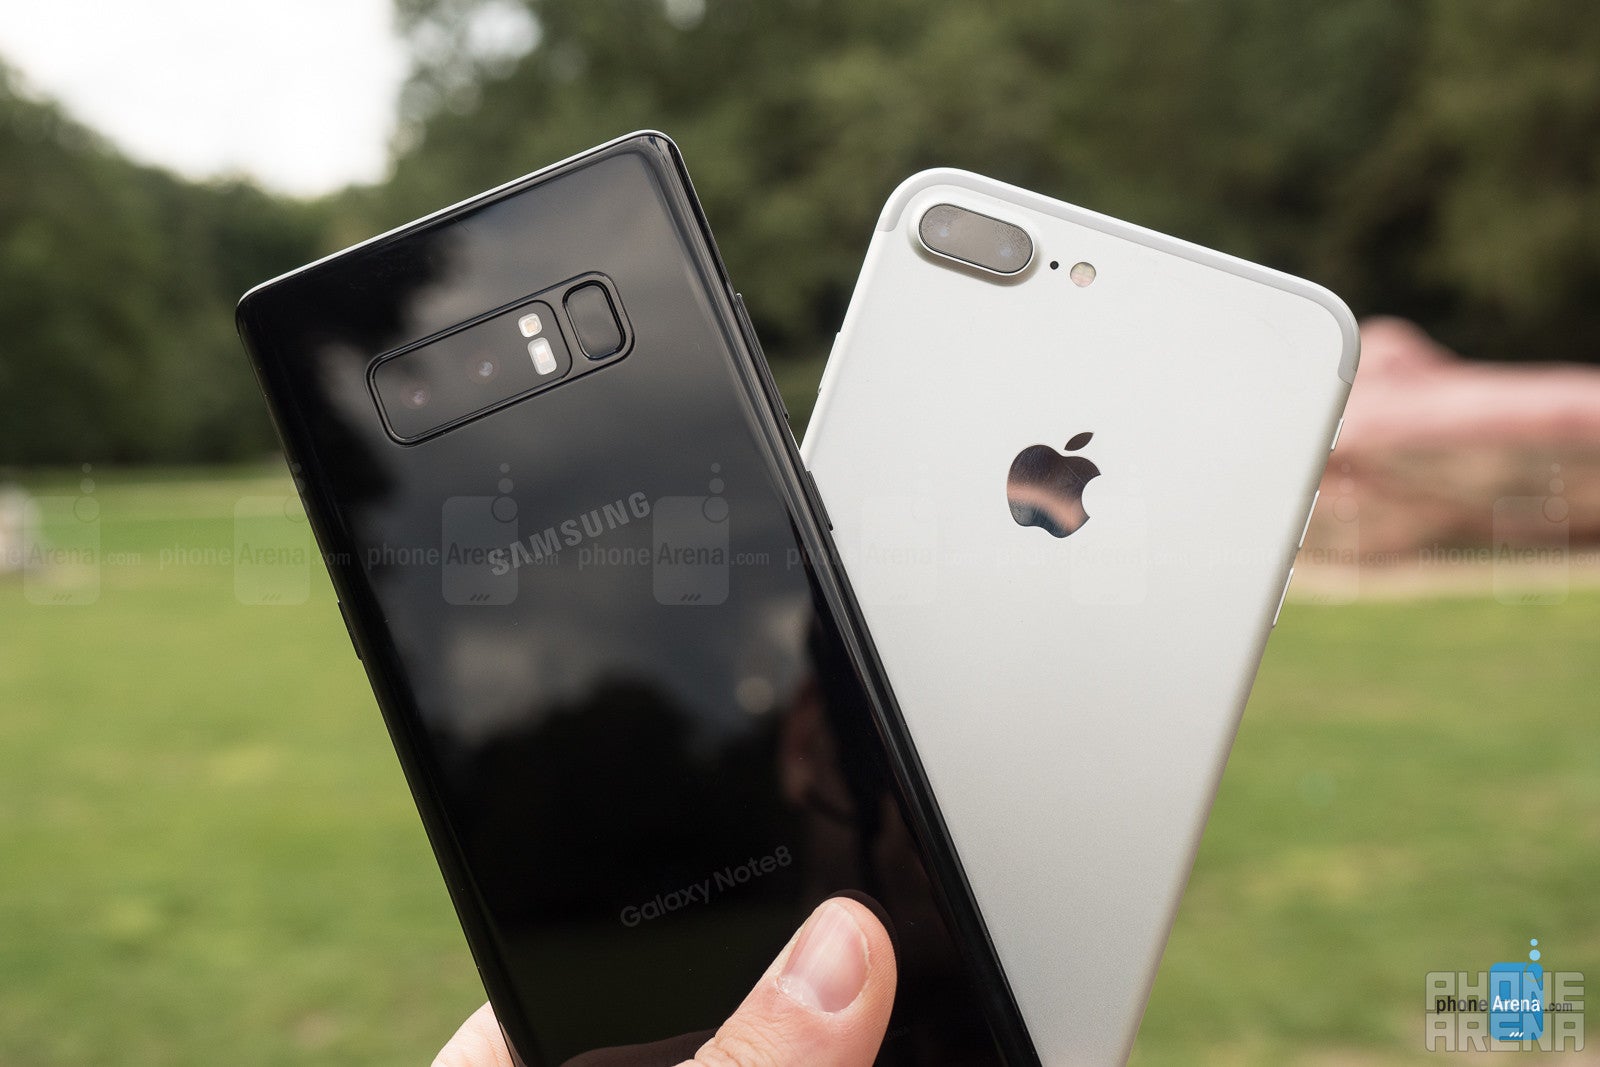 Samsung Galaxy Note 8 vs Apple iPhone 7 Plus